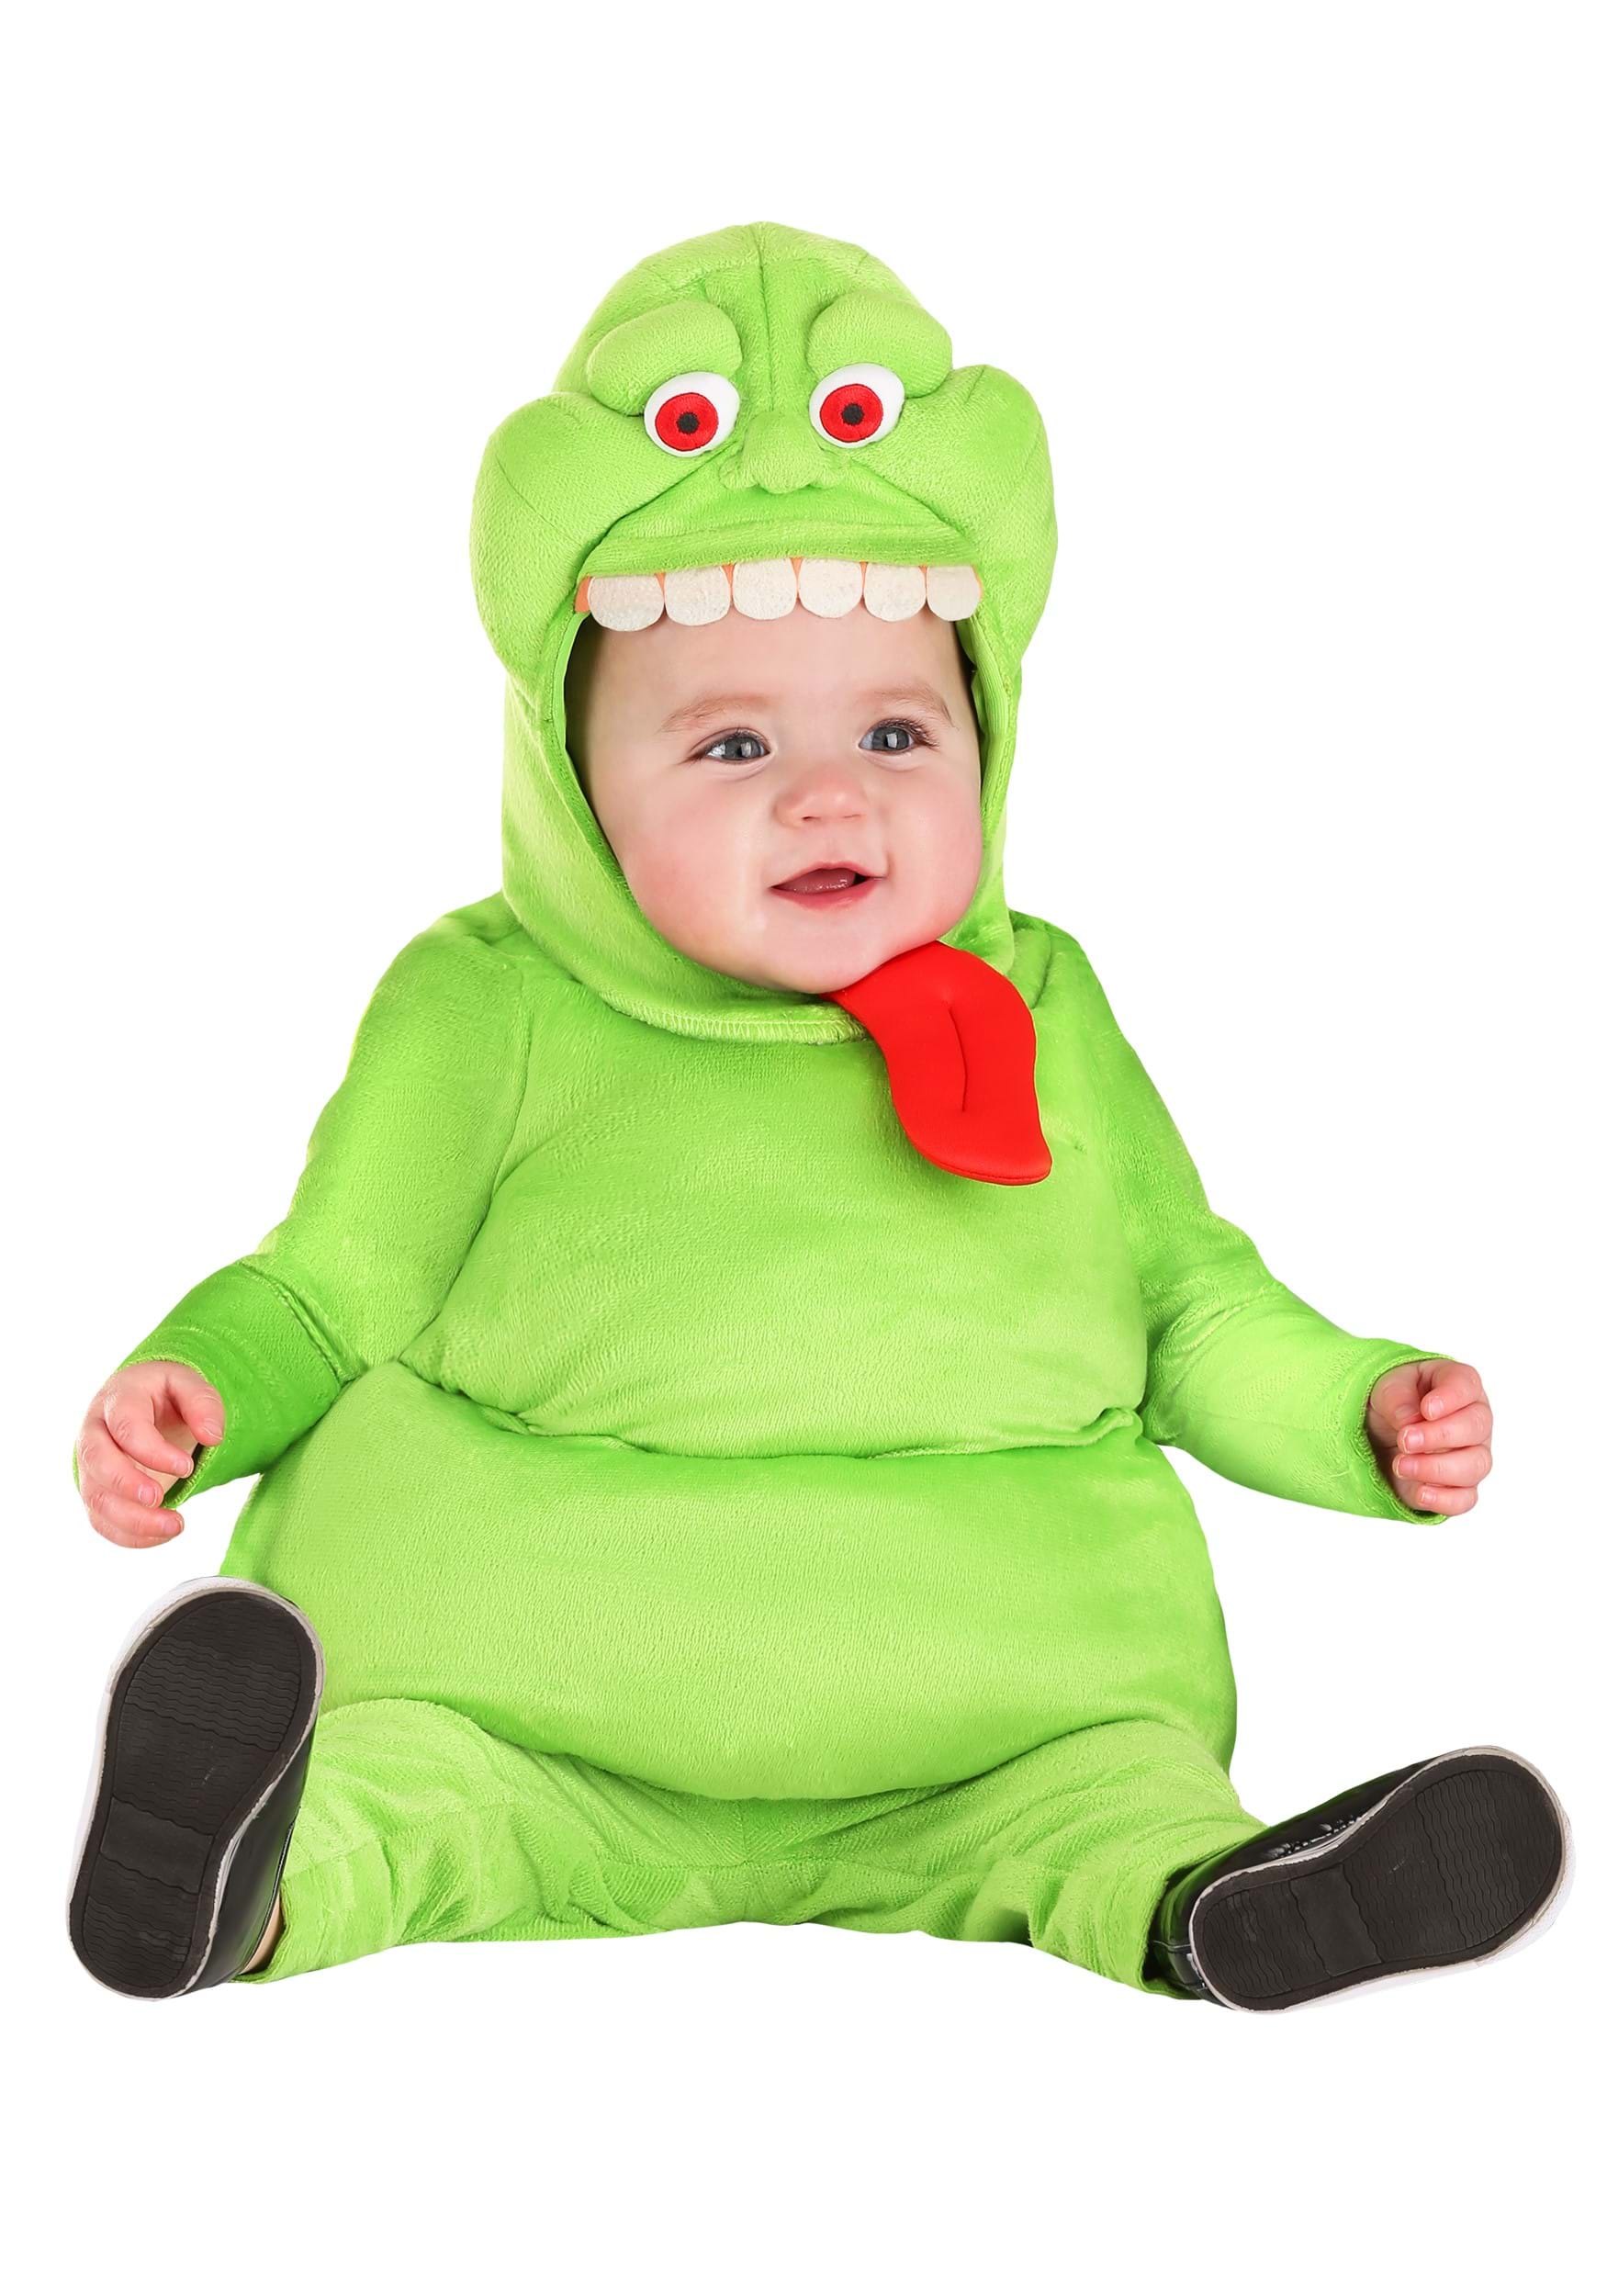 Ghostbusters Slimer Costume For Infants